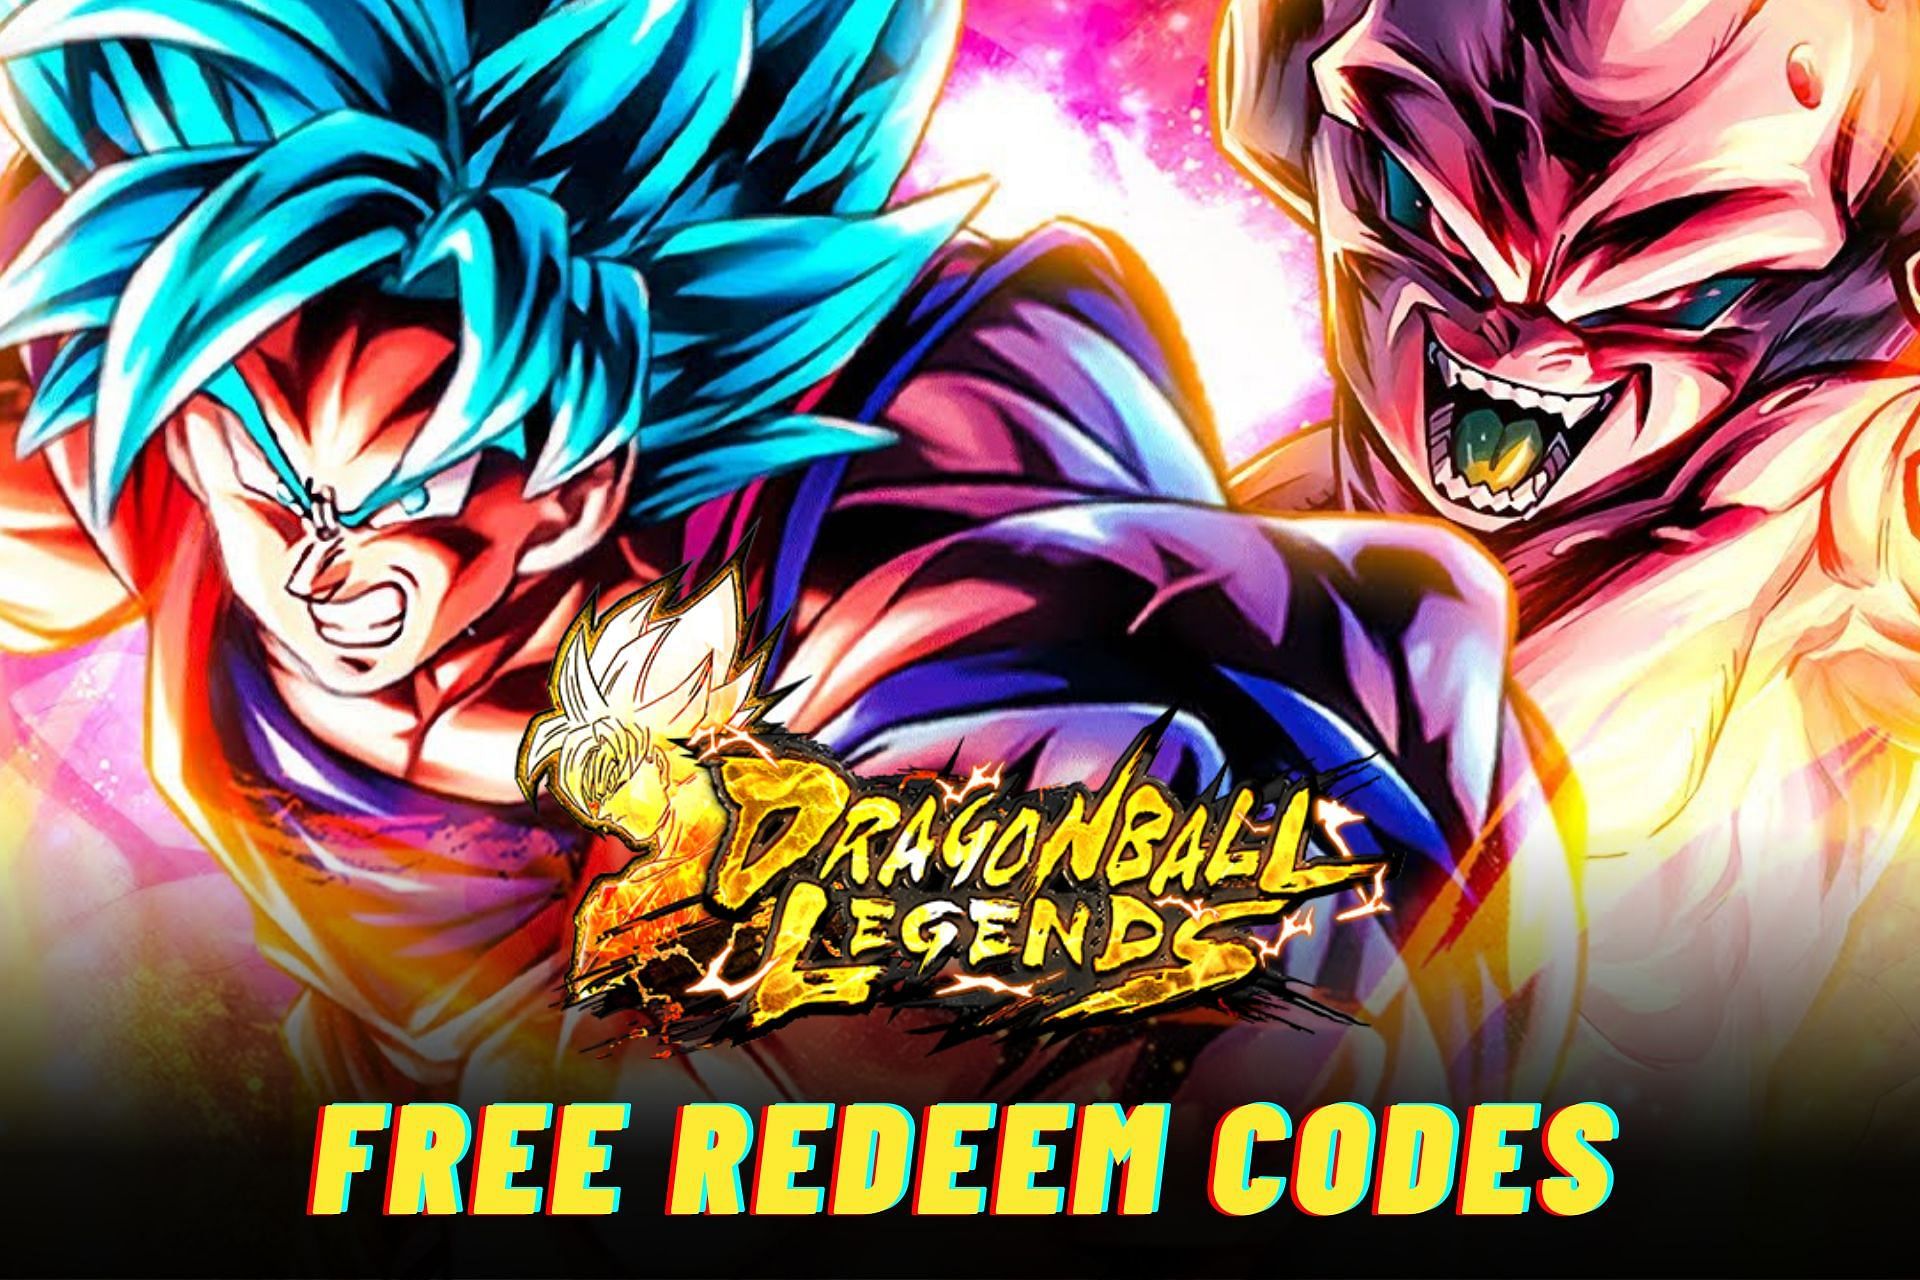 Free redeem codes for Dragon Ball Legends (Image via Sportskeeda)